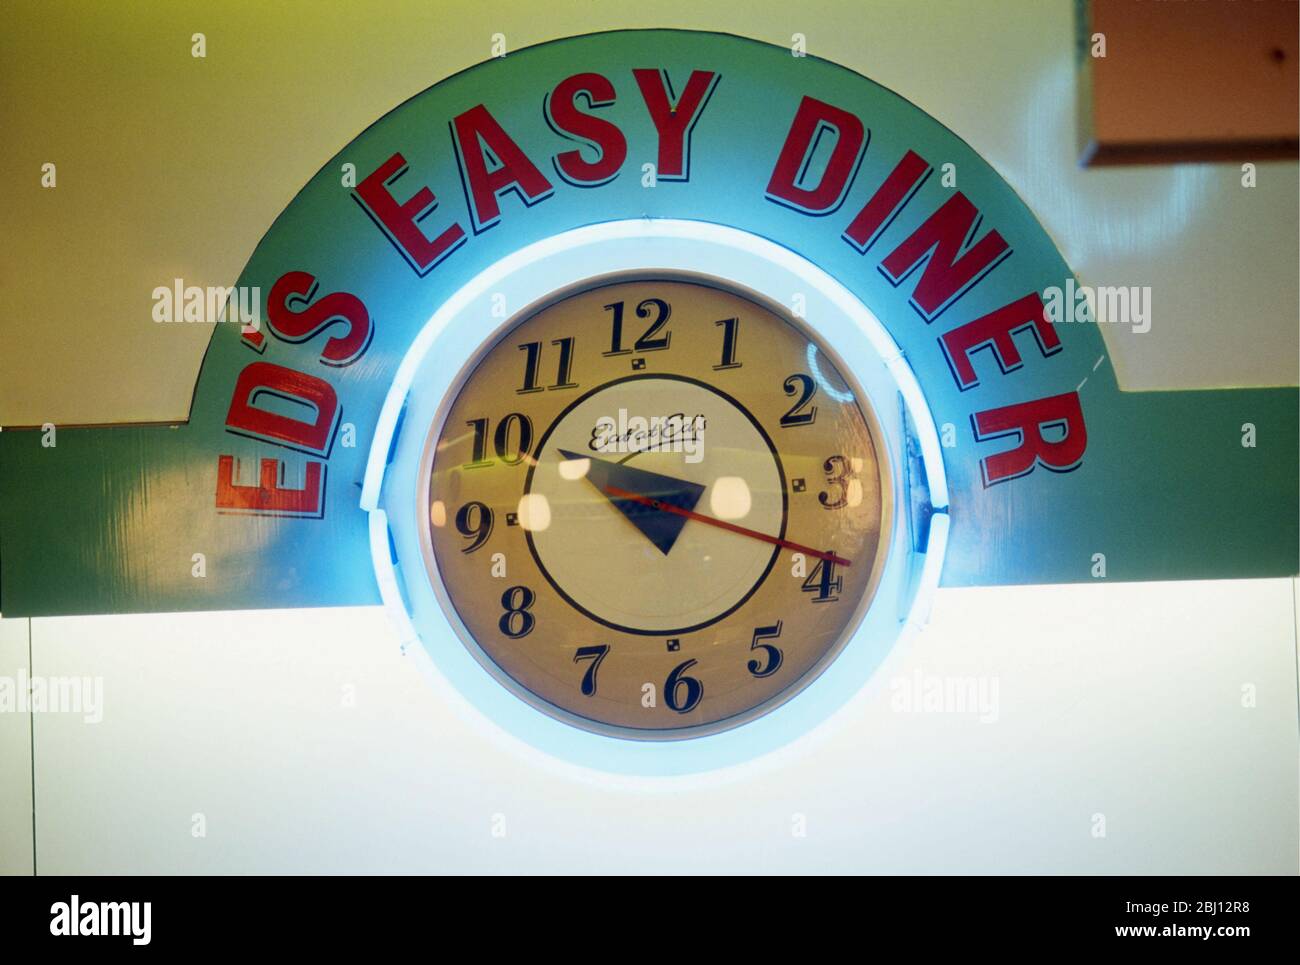 Ed's Easy Diner - Stock Photo